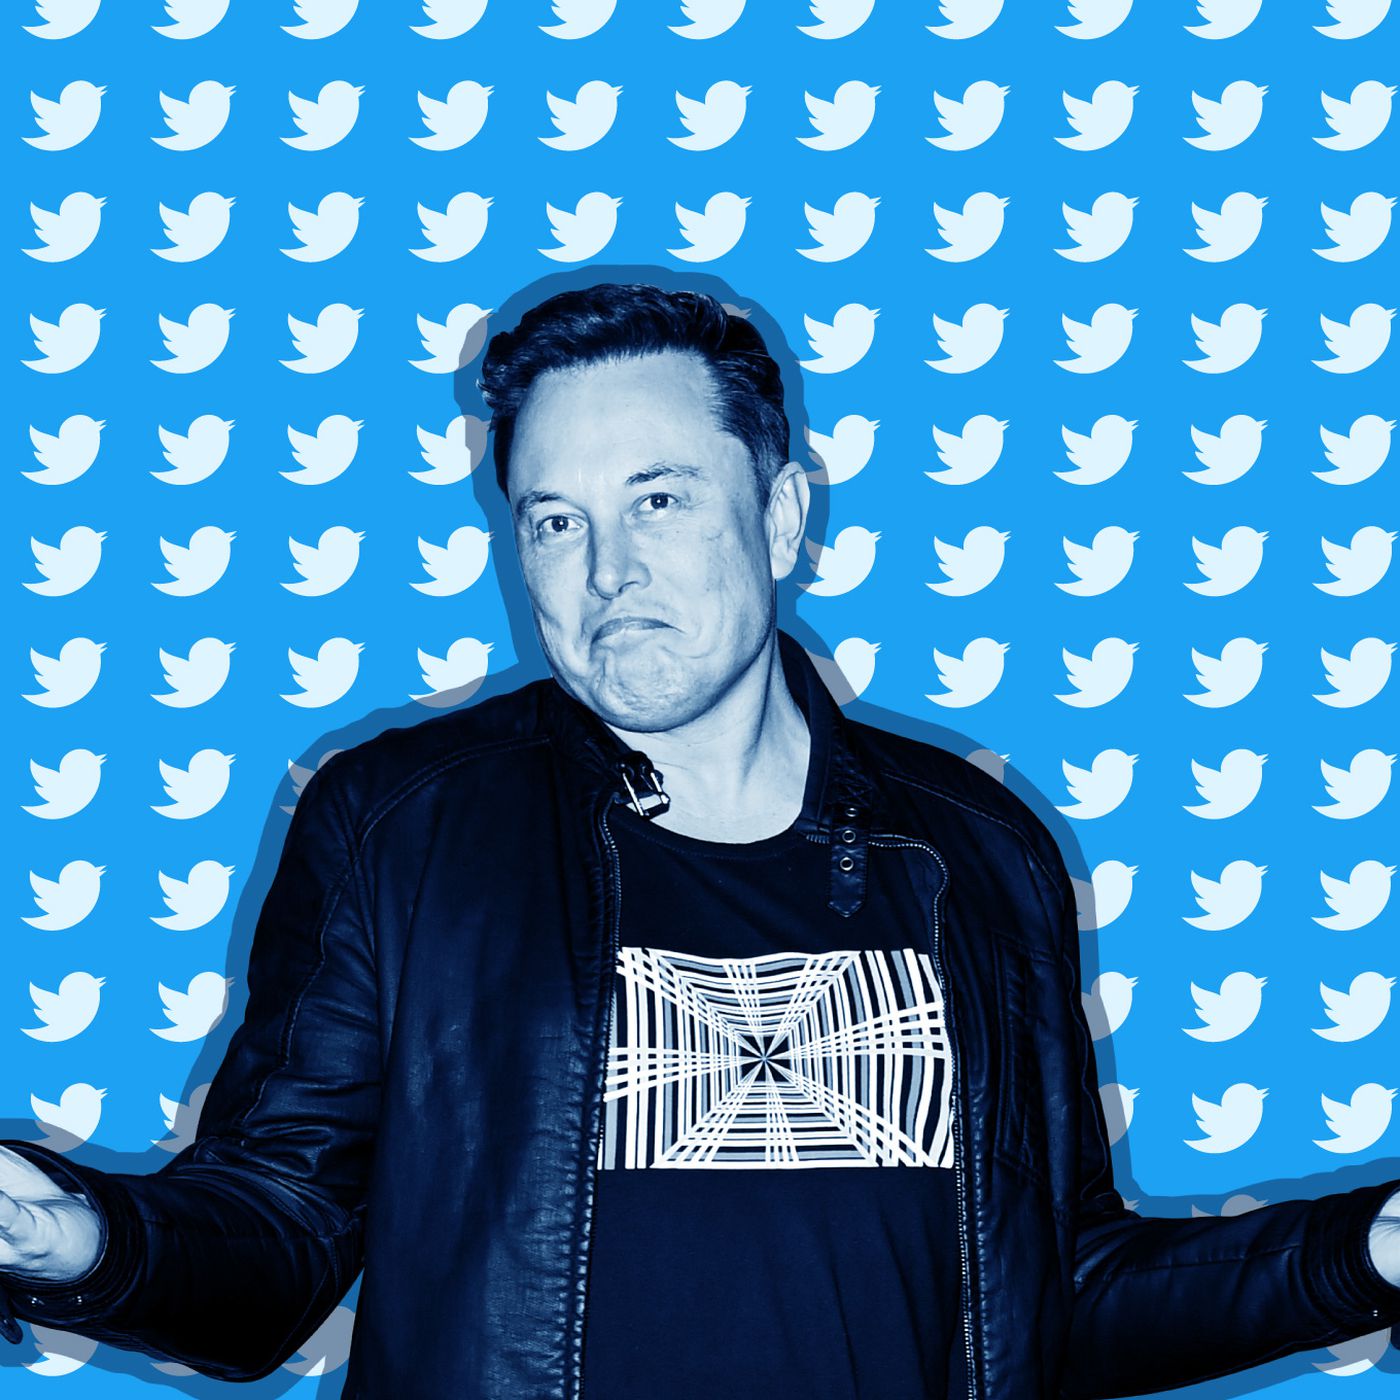 Twitter and Elon Musk